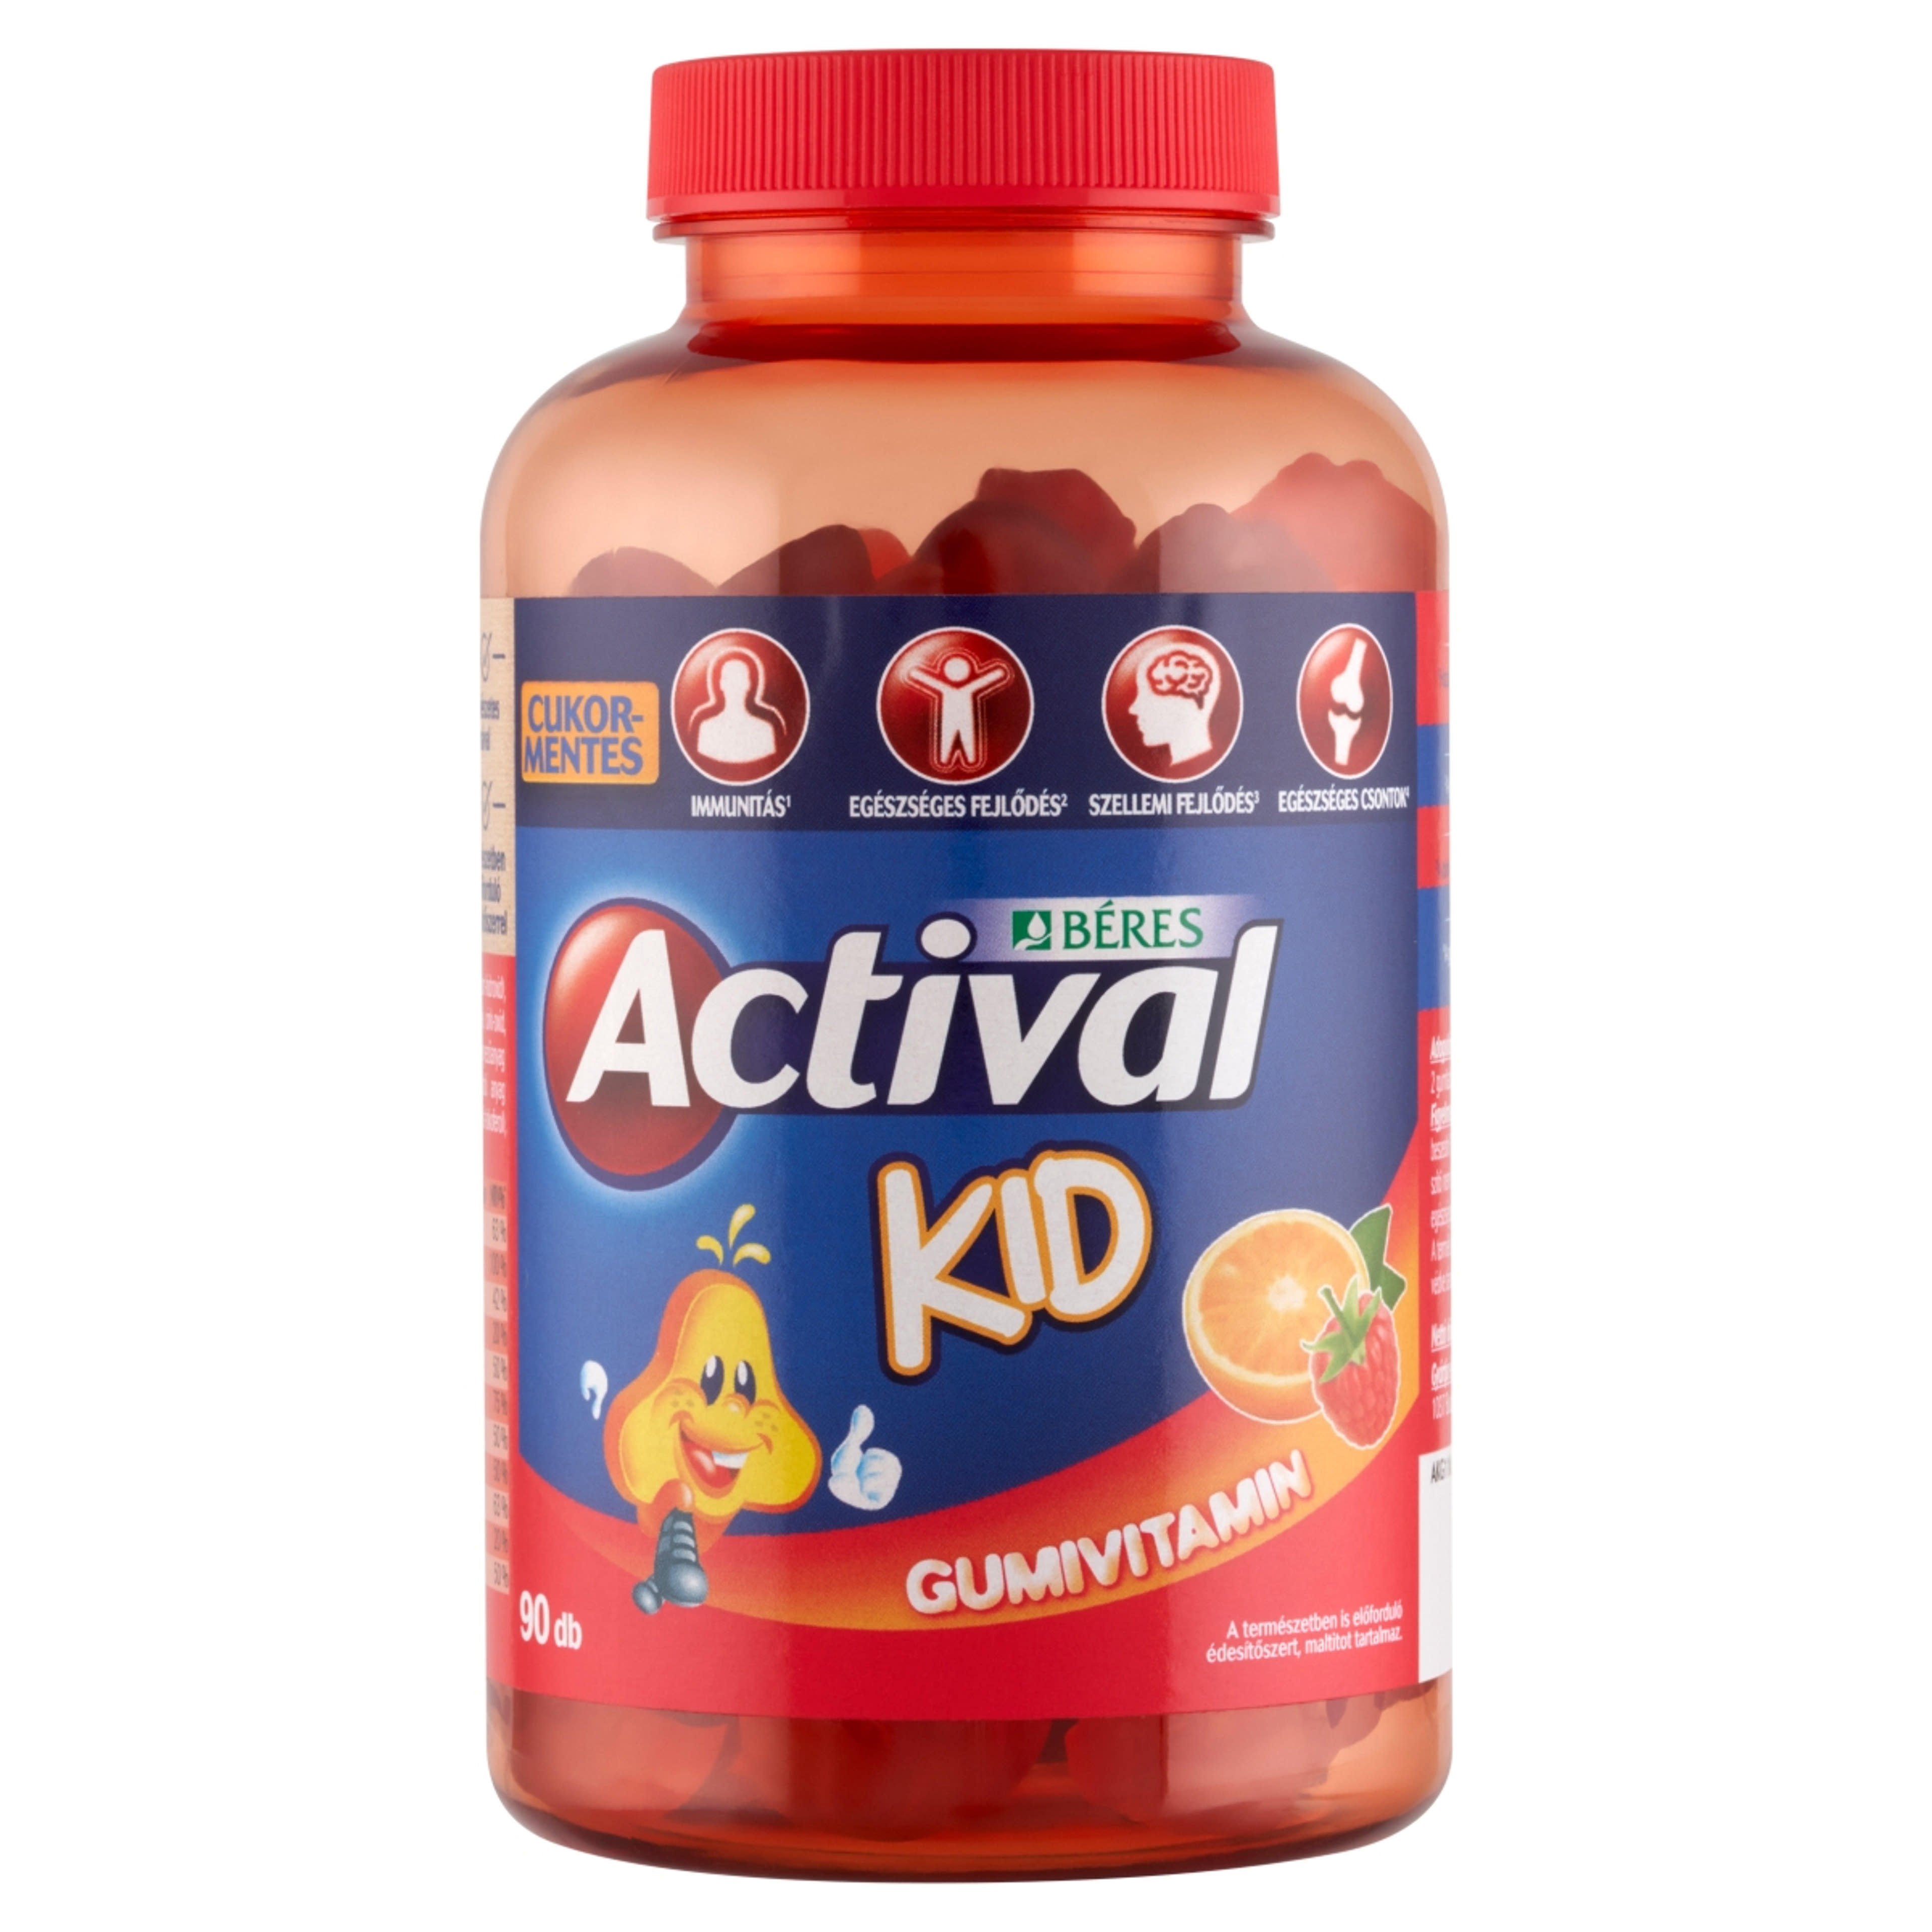 Béres Actival Kid multivitamin gumivitamin narancs és málna ízben - 90 db